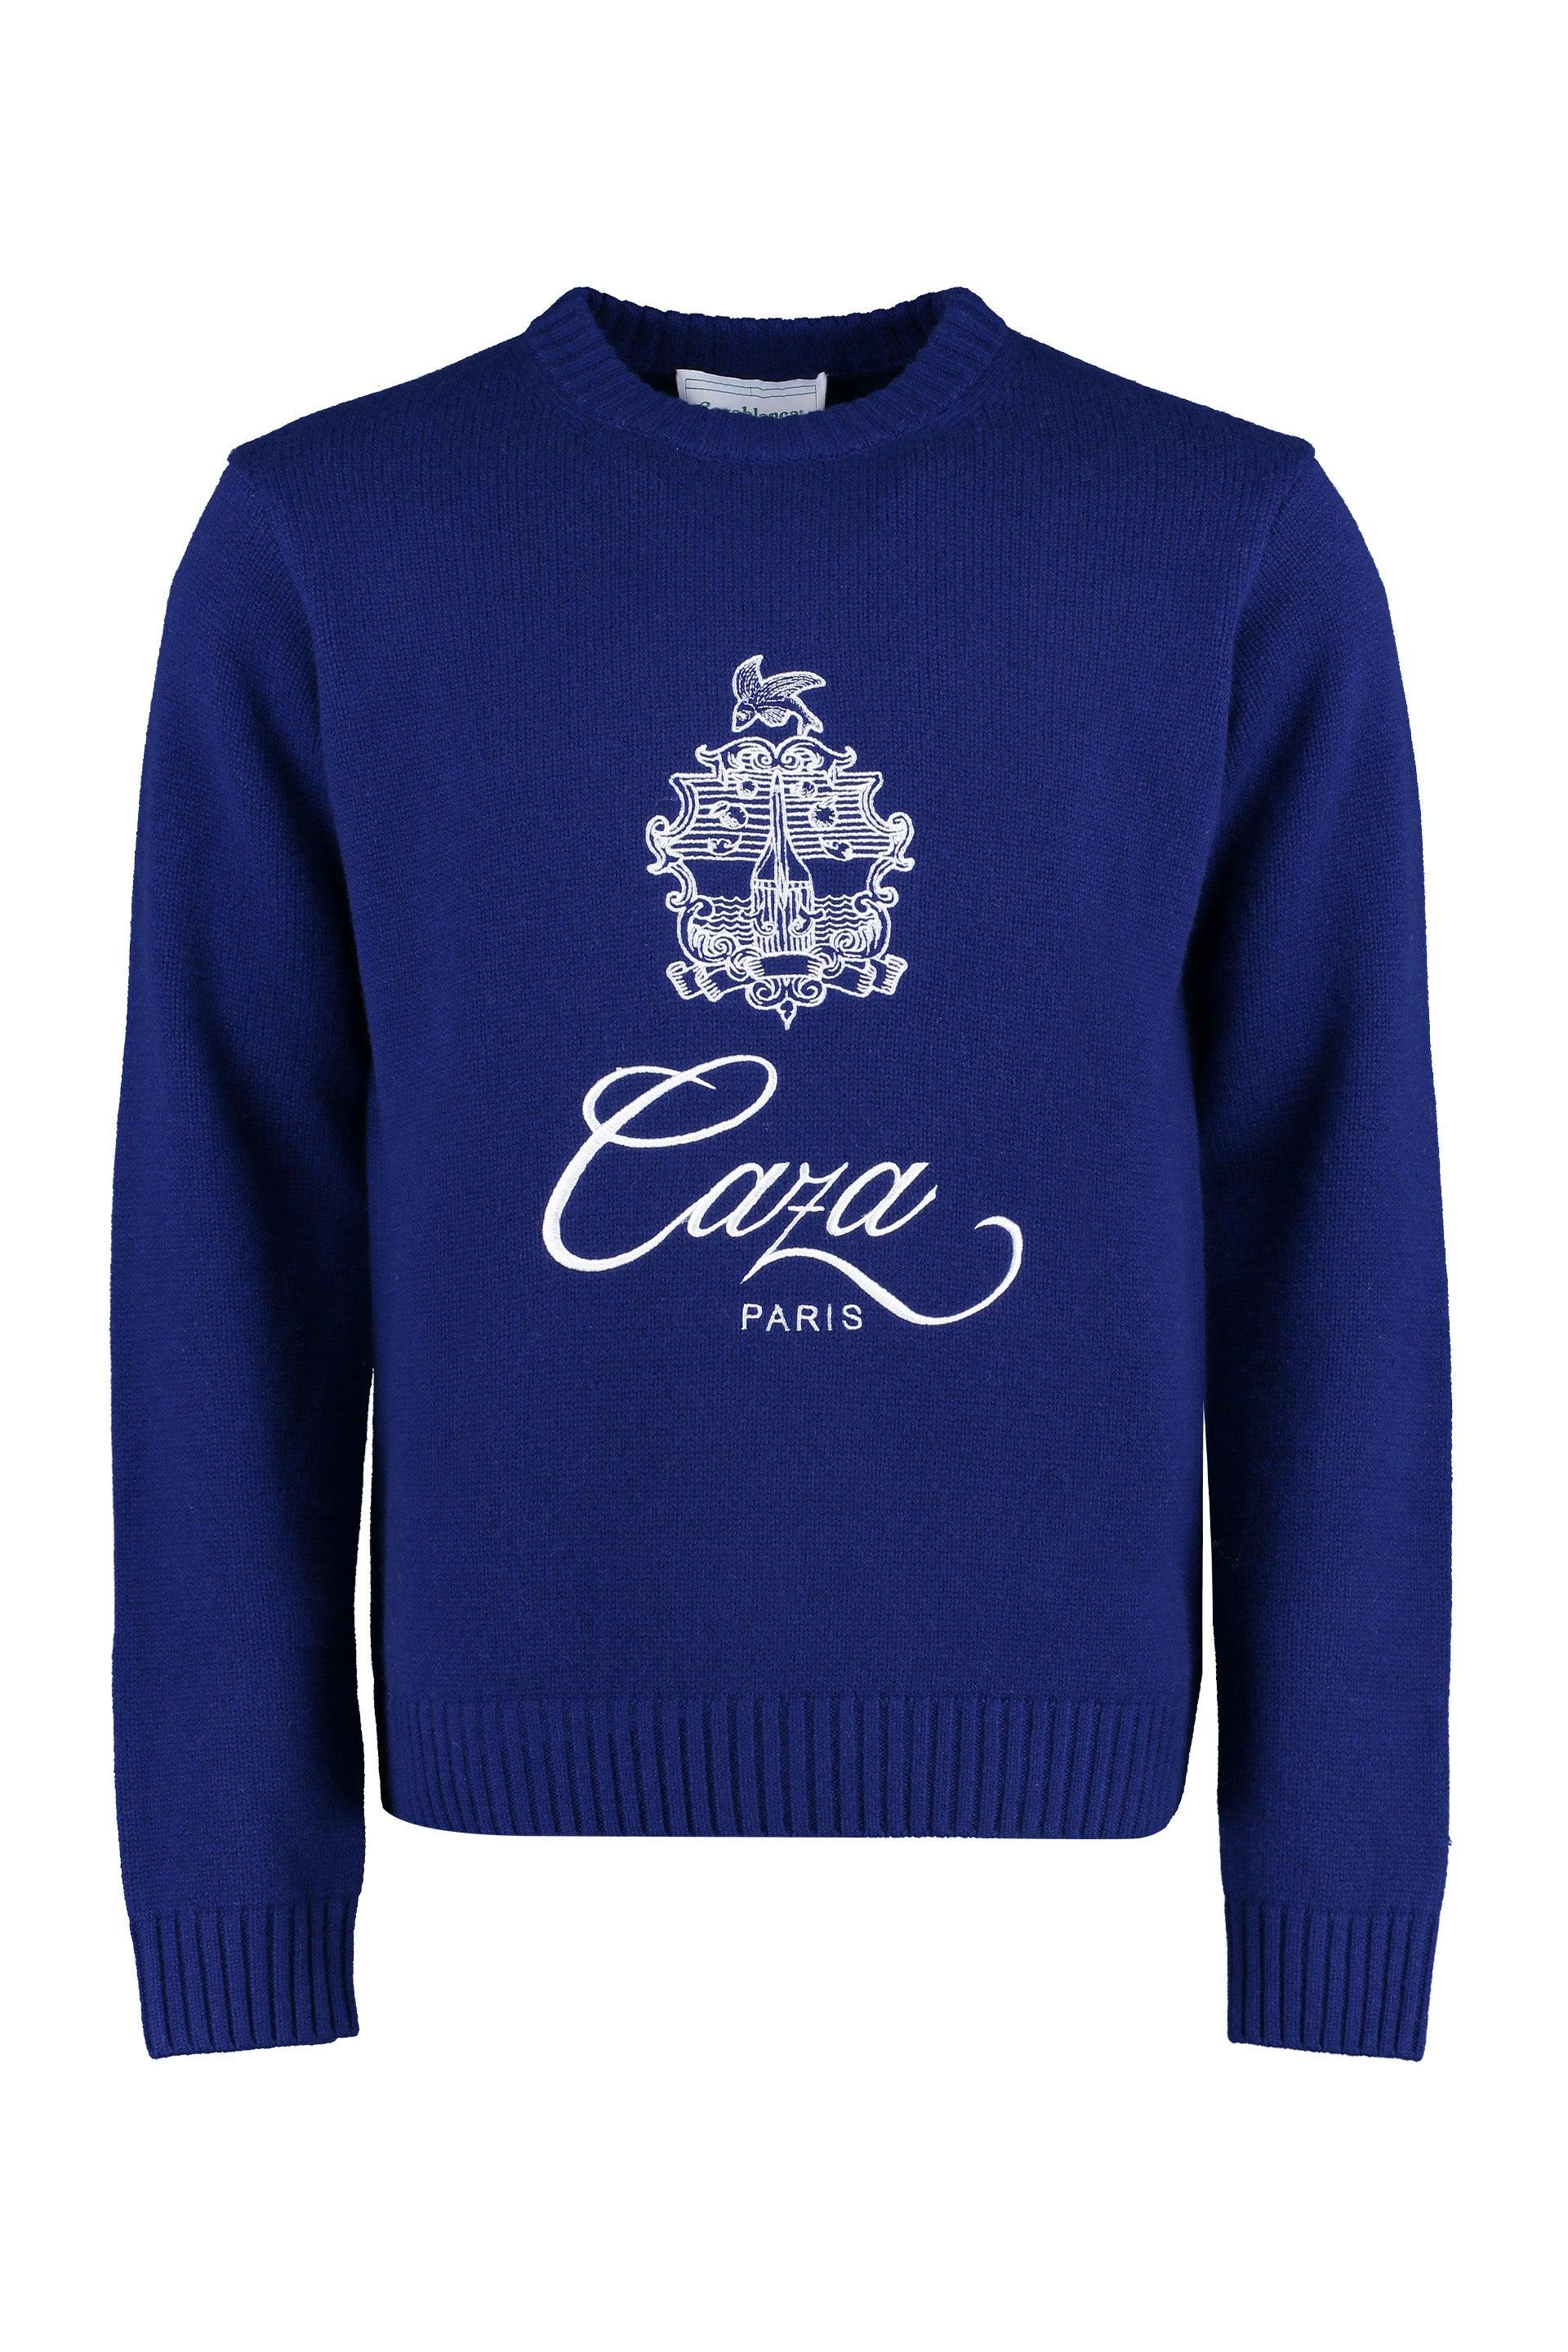 CASABLANCA Monogram Merino-blend Sweater in Blue for Men